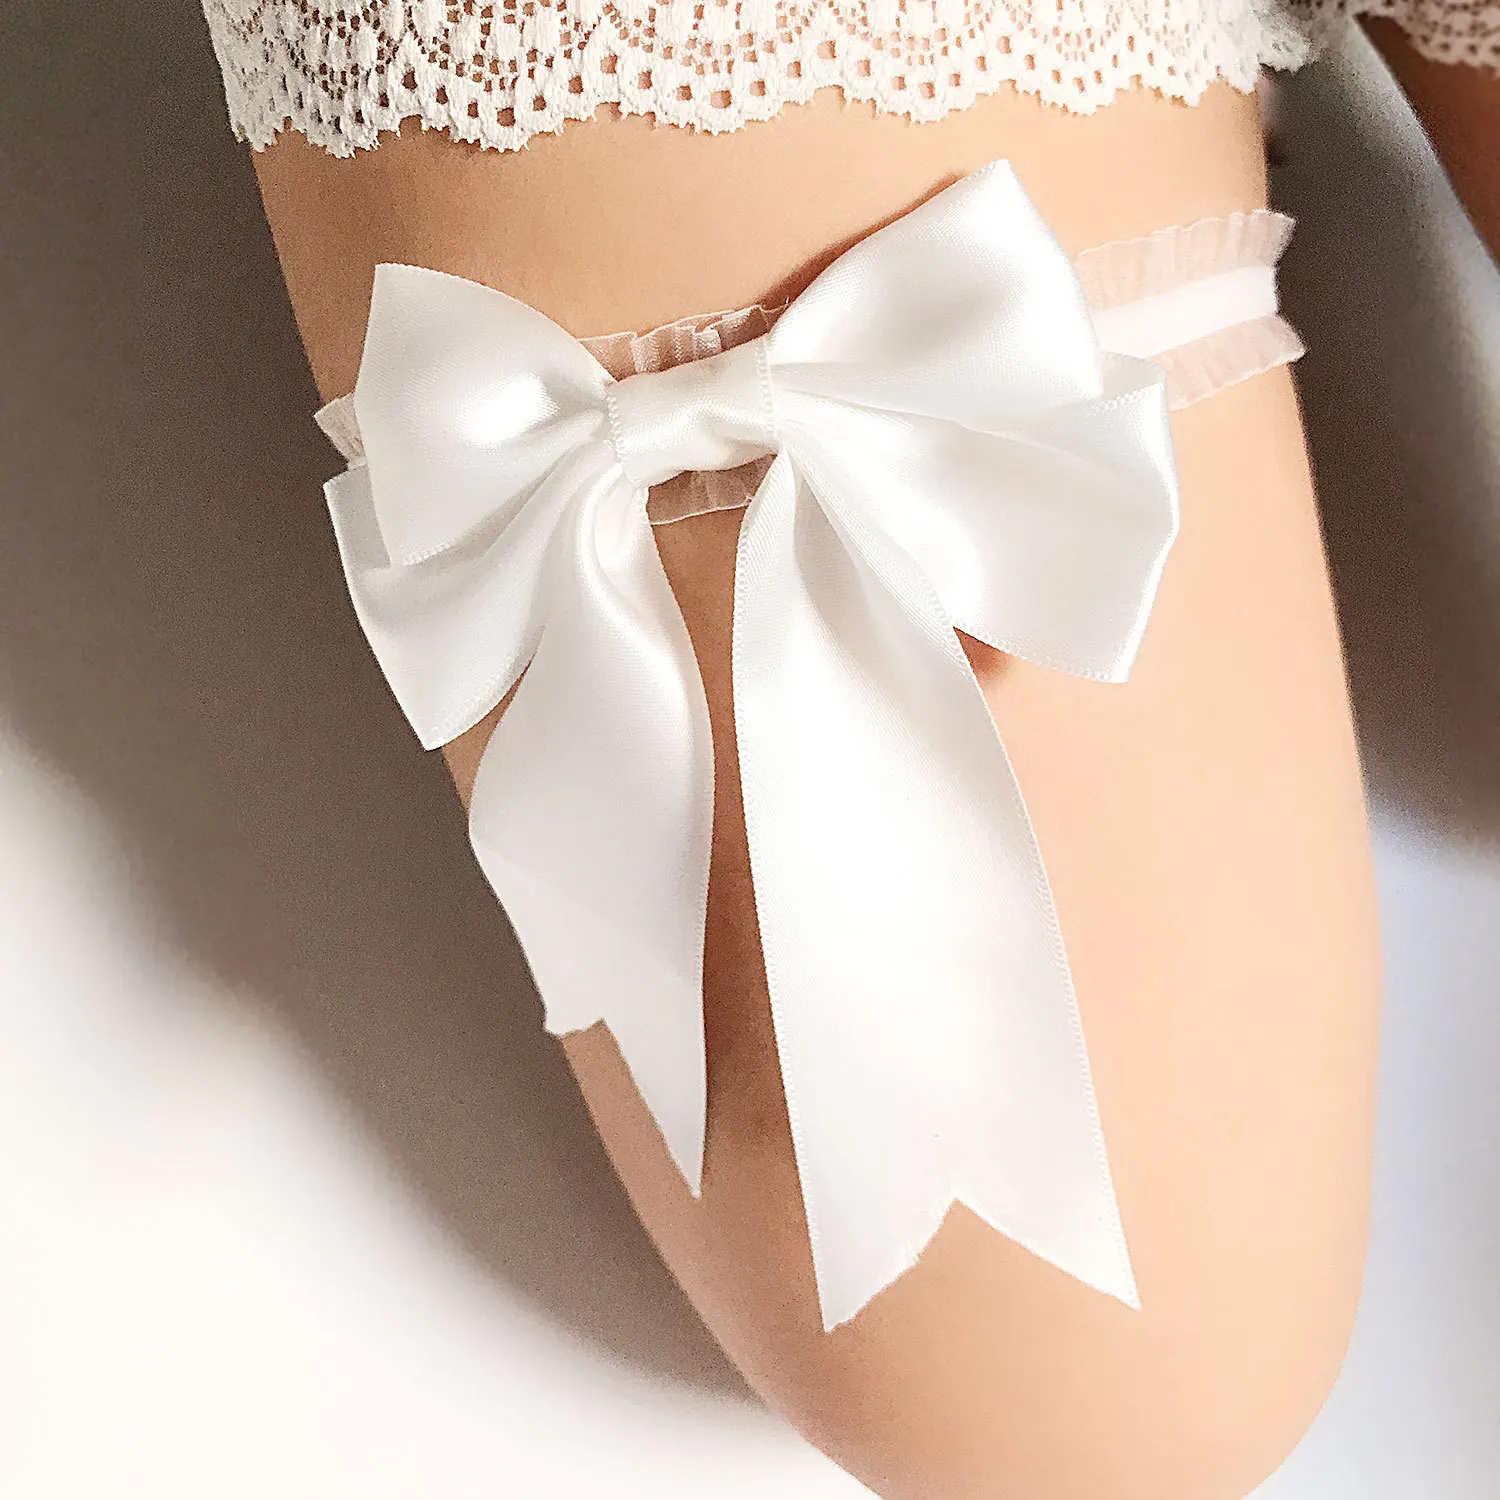 Women Bridal Elastic Lace Bowknot Garters Leg Belt Wedding Party AccessoriesS JM 